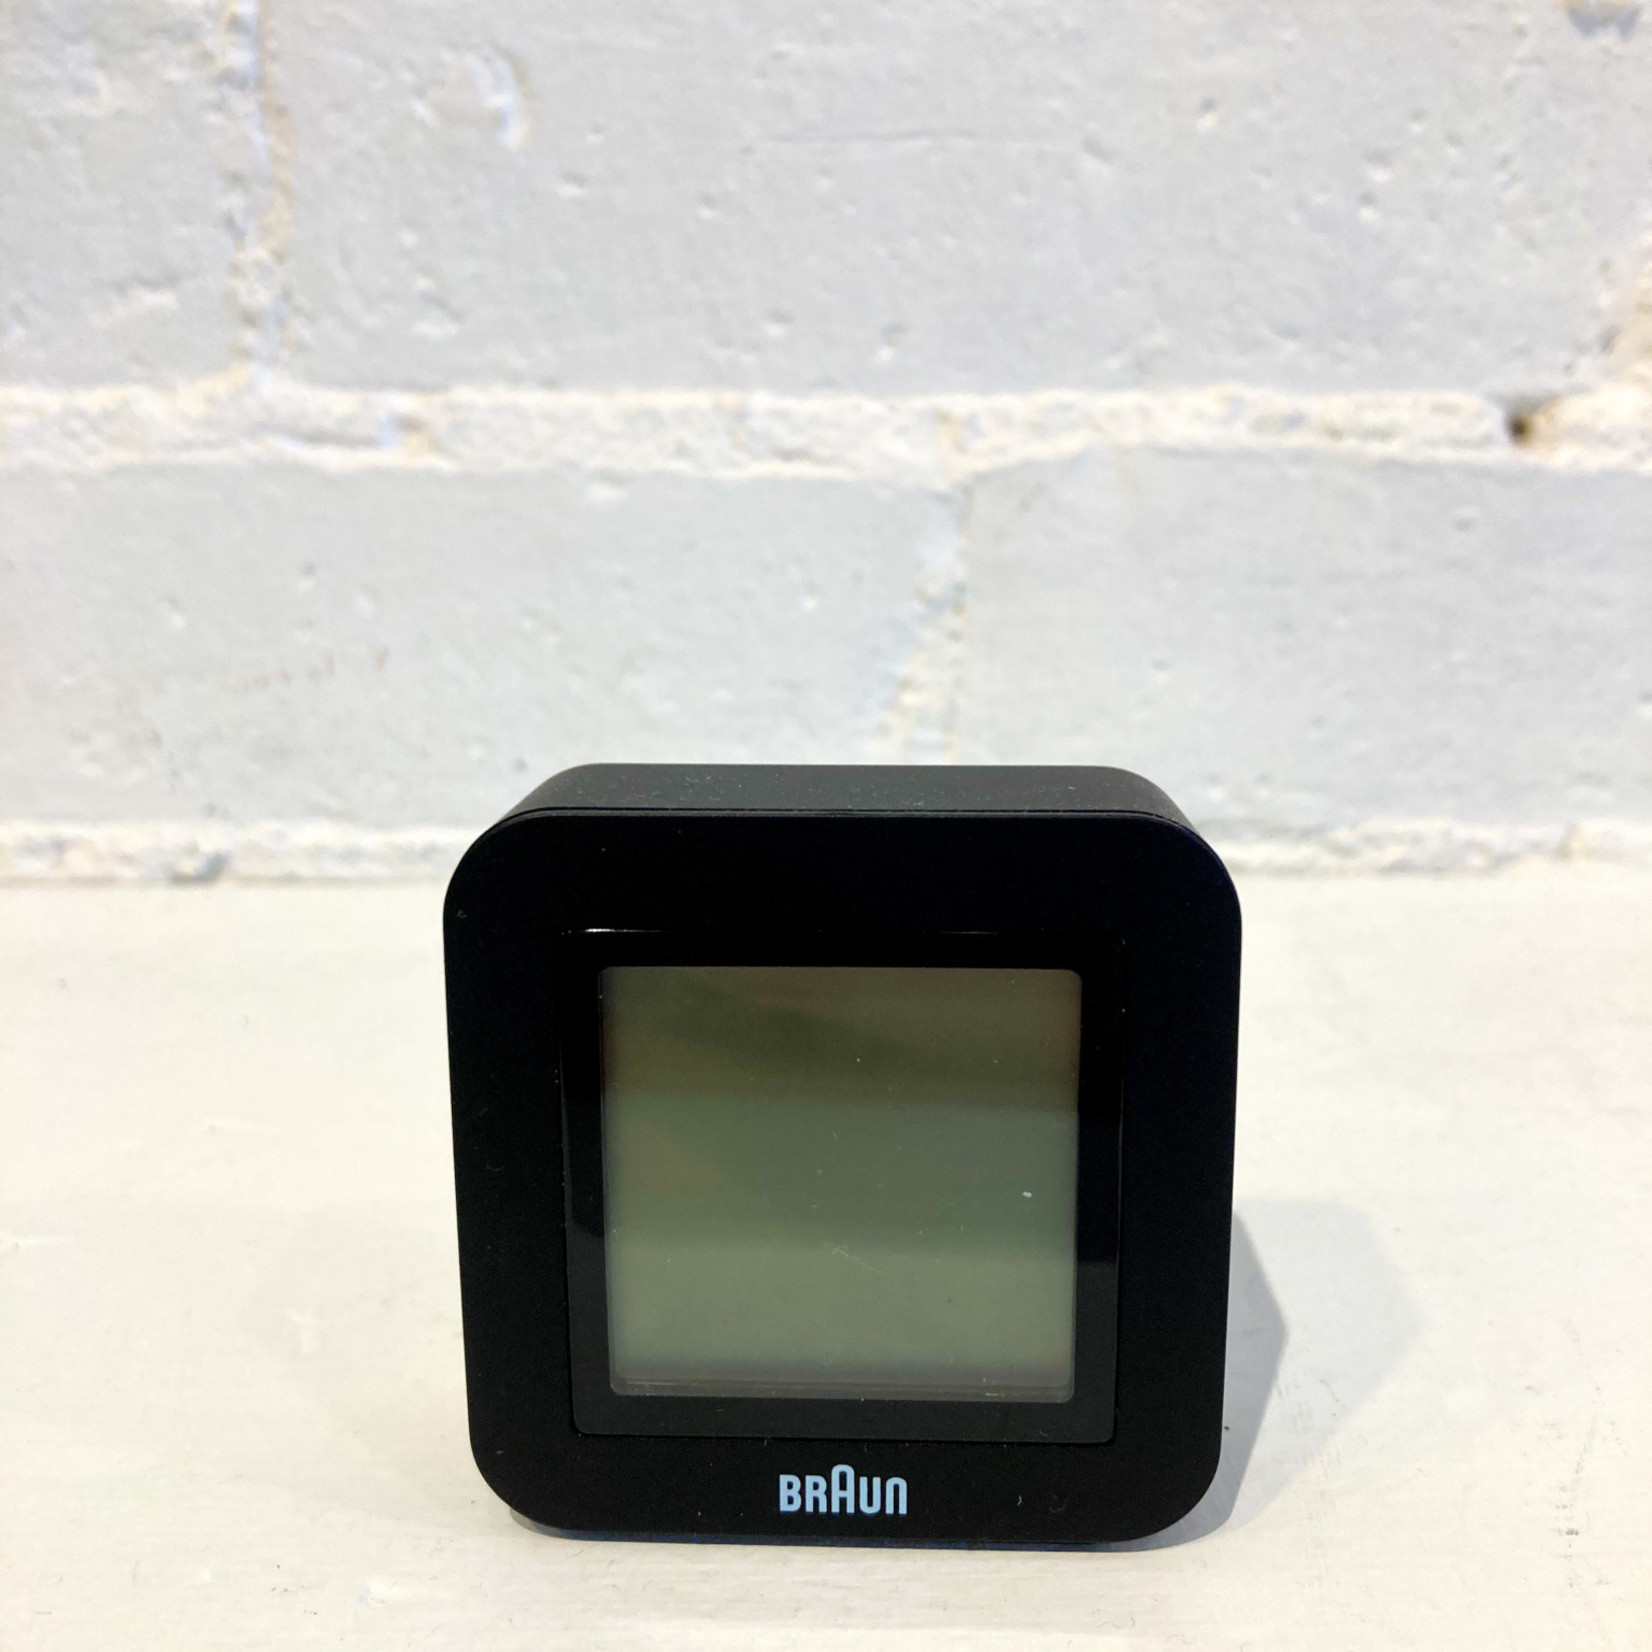 Braun Travel Alarm Clock: Digital Black